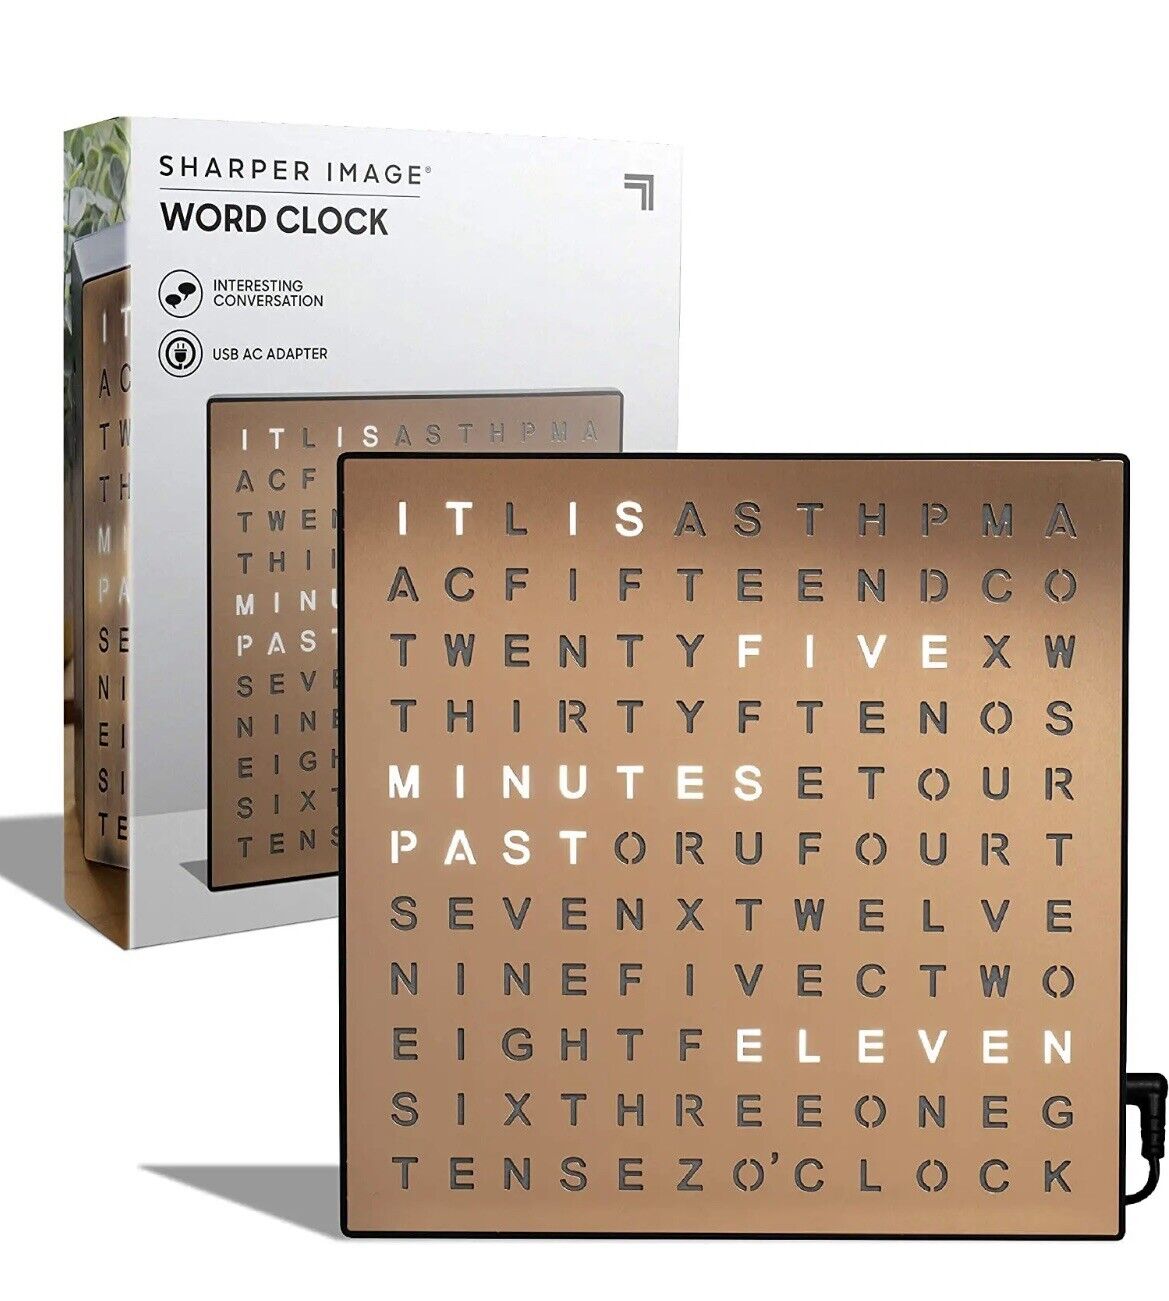 Sharper Image Novelty Word Clock Unique Light Up Electronic Words Led Display